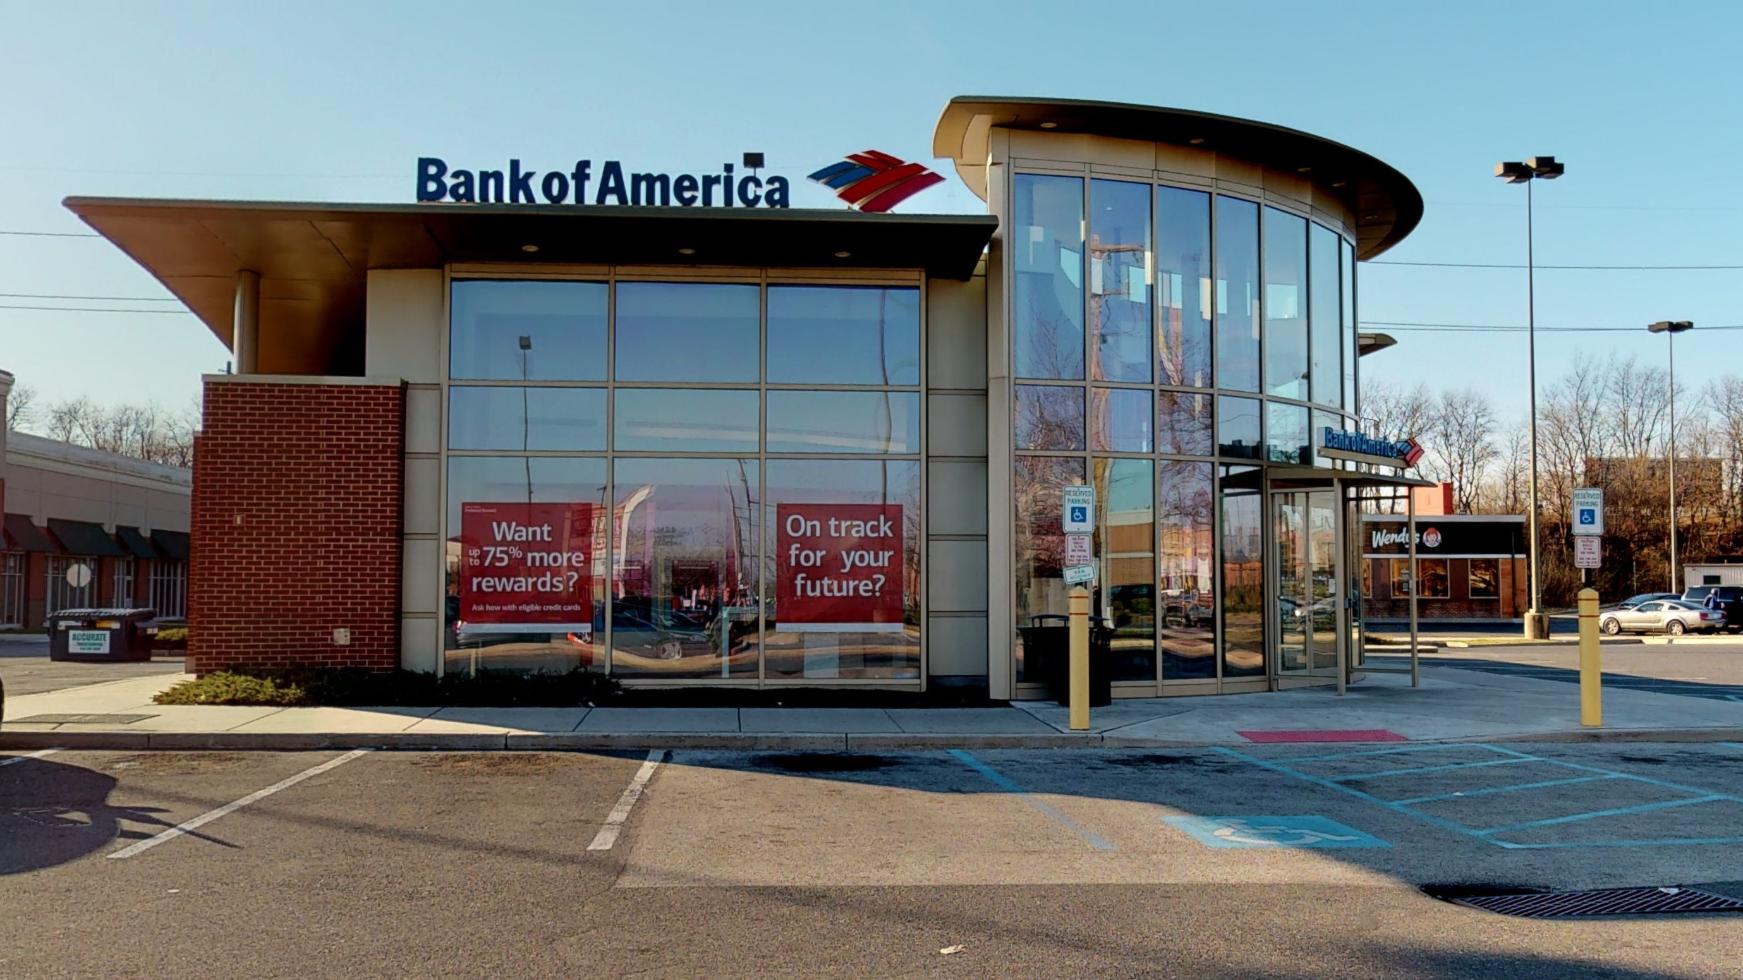 Bank of America financial center with drive-thru ATM | 2330 W Oregon Ave, Philadelphia, PA 19145